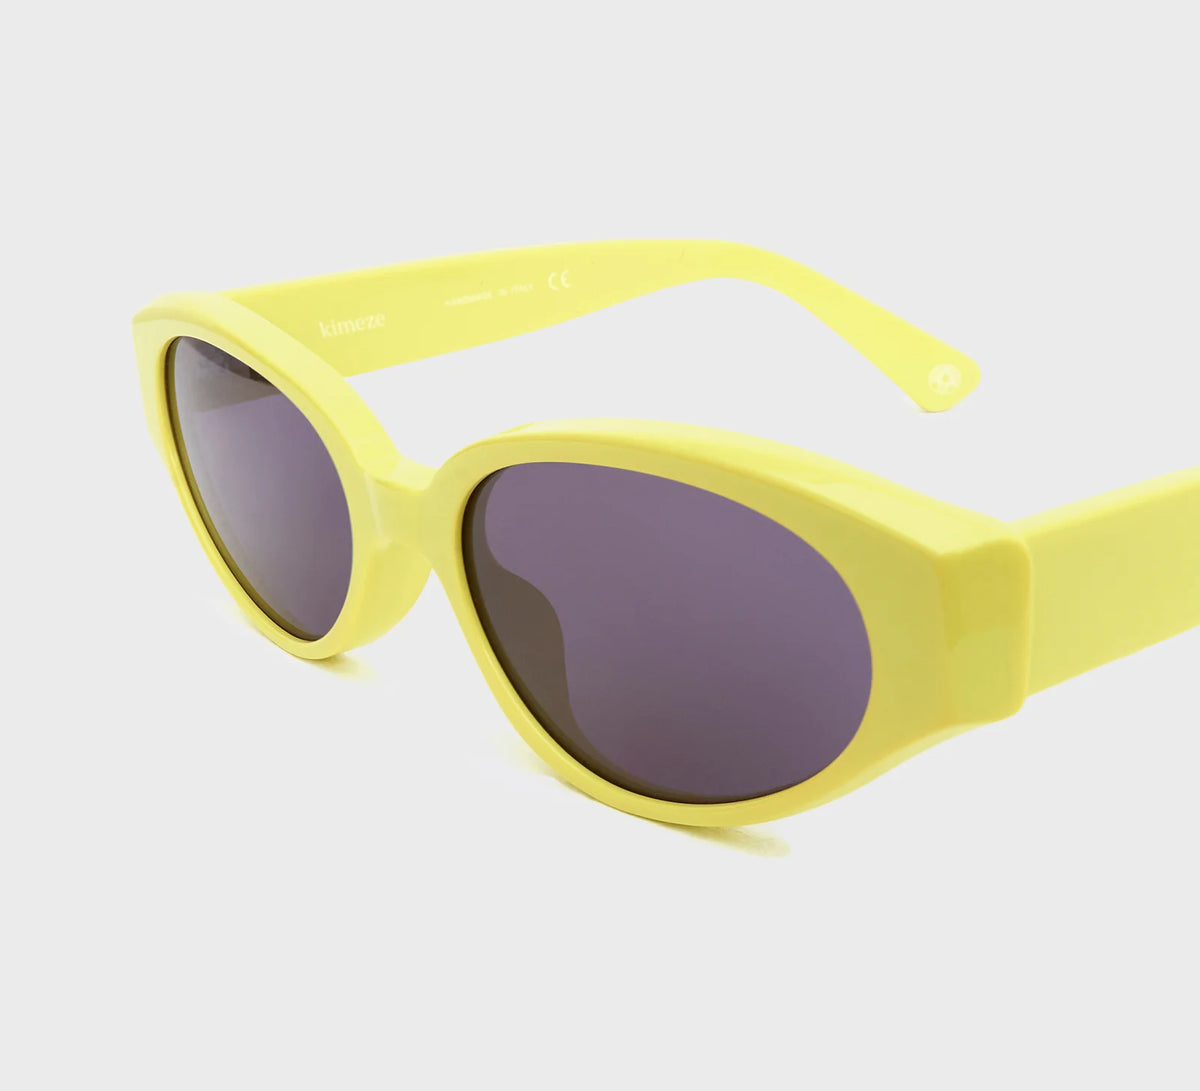 Gabriel Neon Unisex Cateye Sunglasses